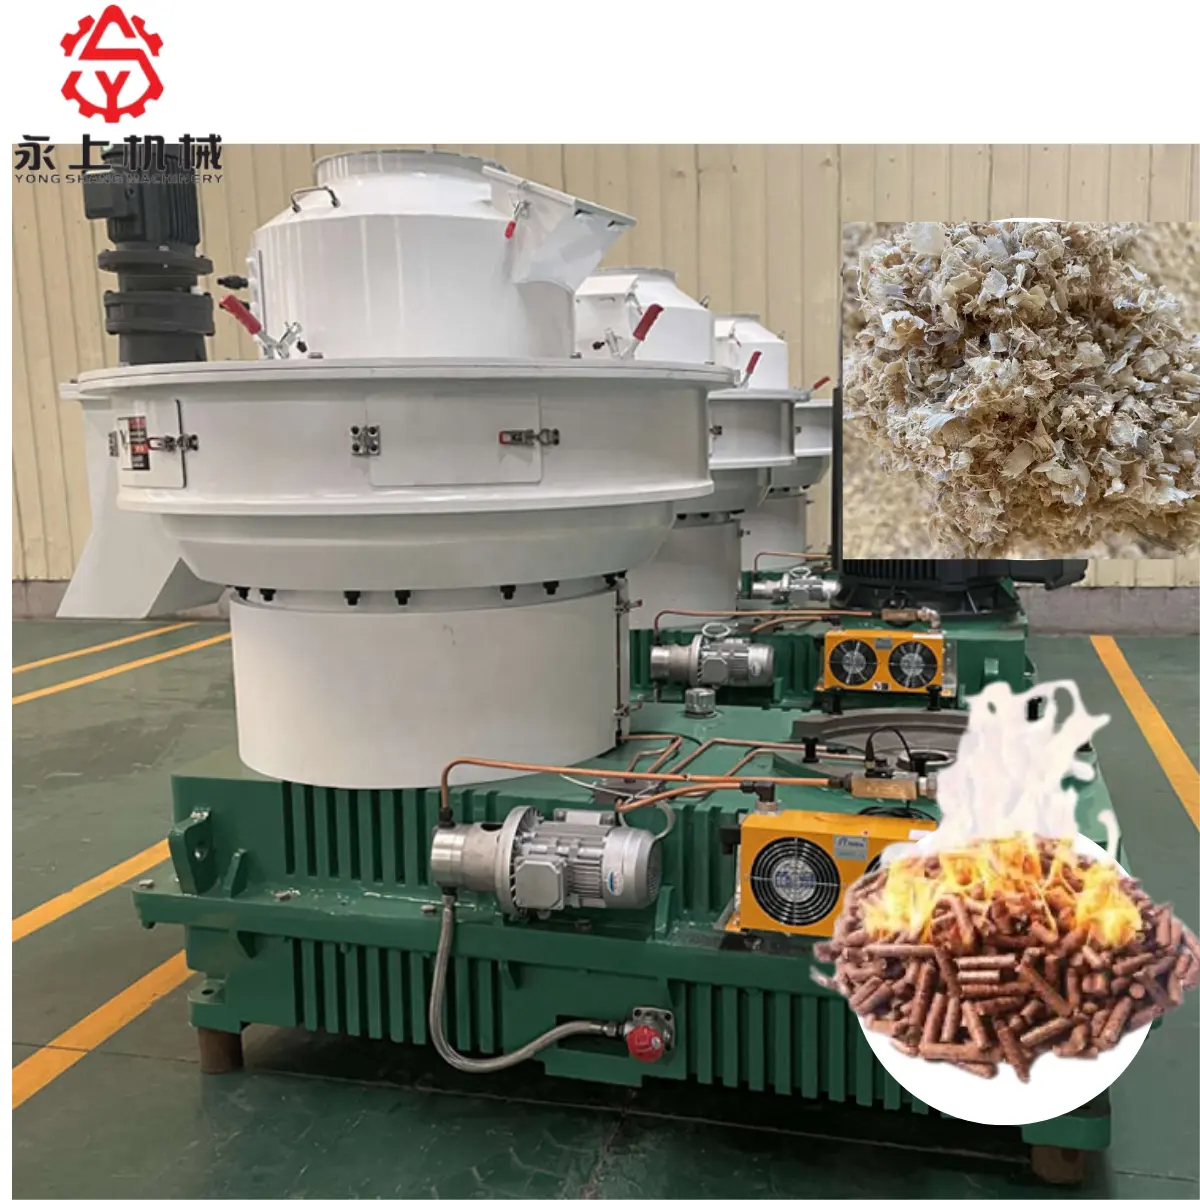 Liyang Yongshang Directe Verkoop Hoge Efficiëntie Ce Certificering Biomassa Brandstof Granulator Hout Stro Afval Zaagsel Slijpmachine